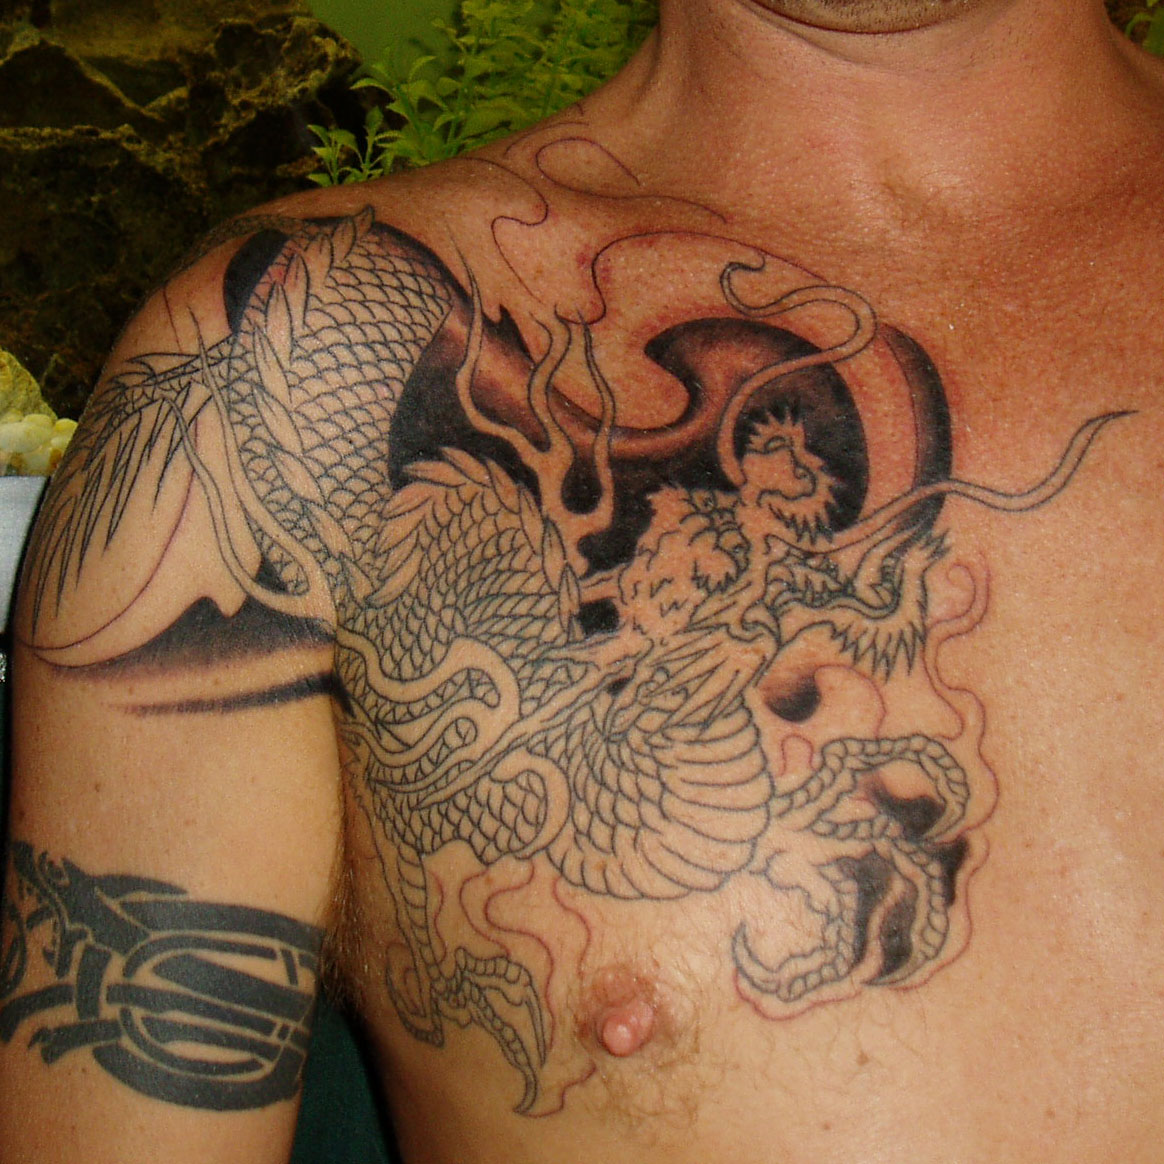 A Japanese koi fish tattoo